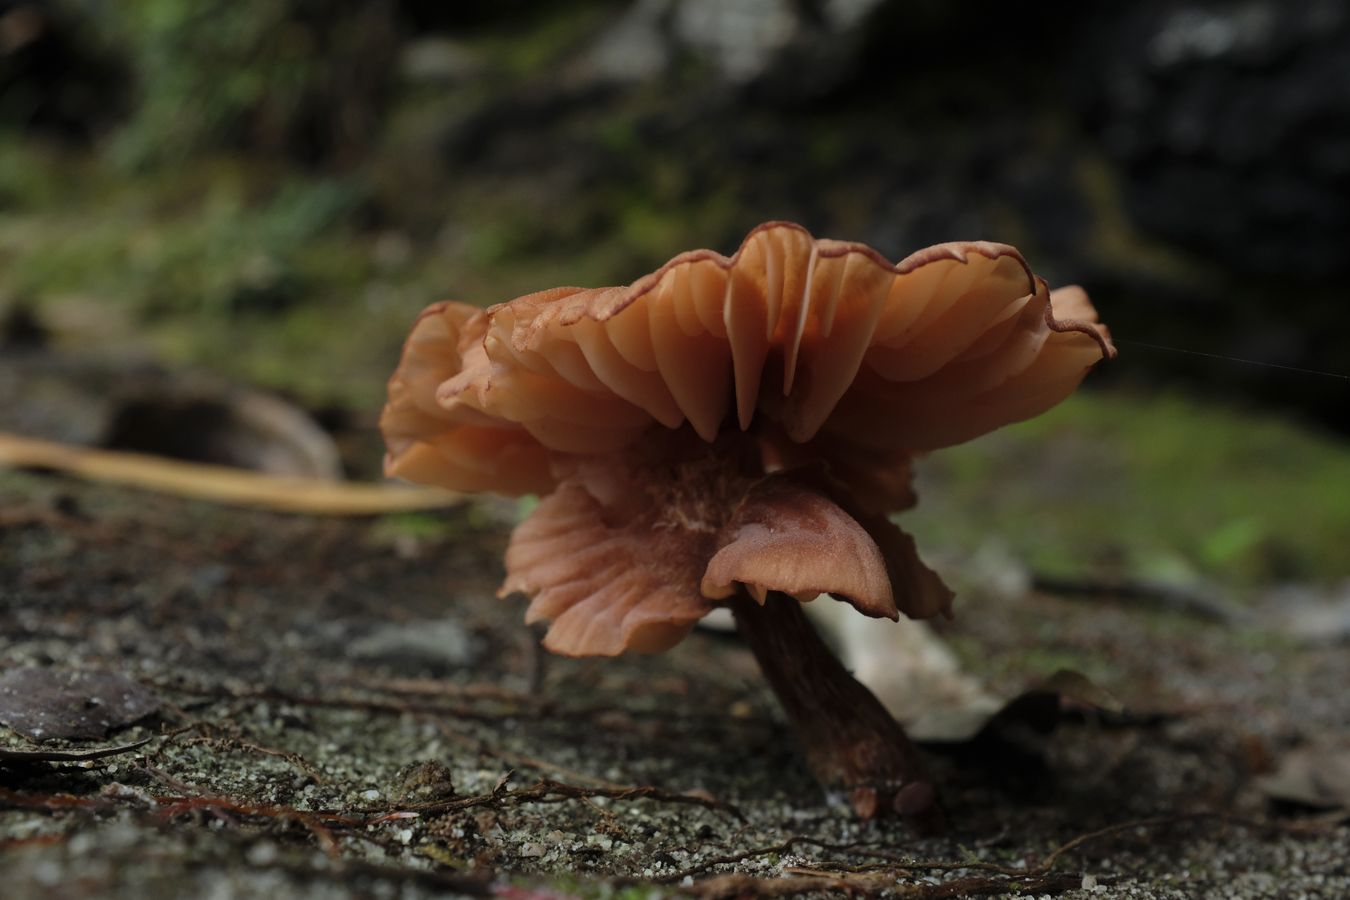 Laccaria Fungus { Probably Hydnangiaceae }